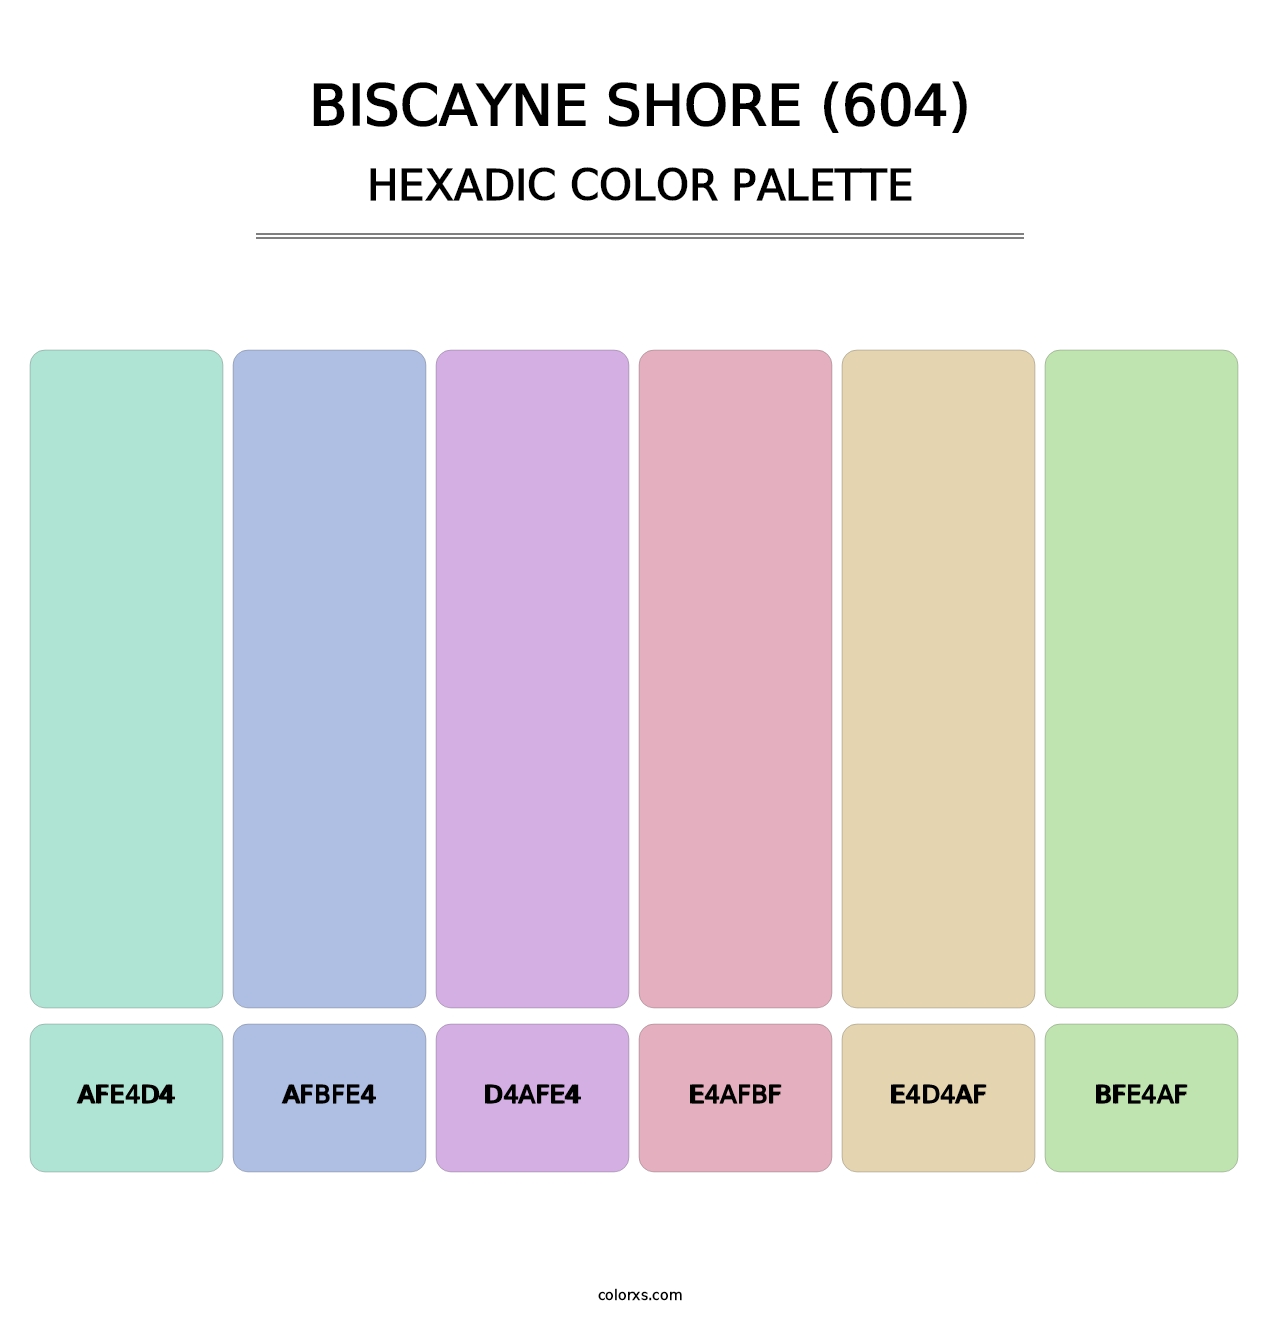 Biscayne Shore (604) - Hexadic Color Palette